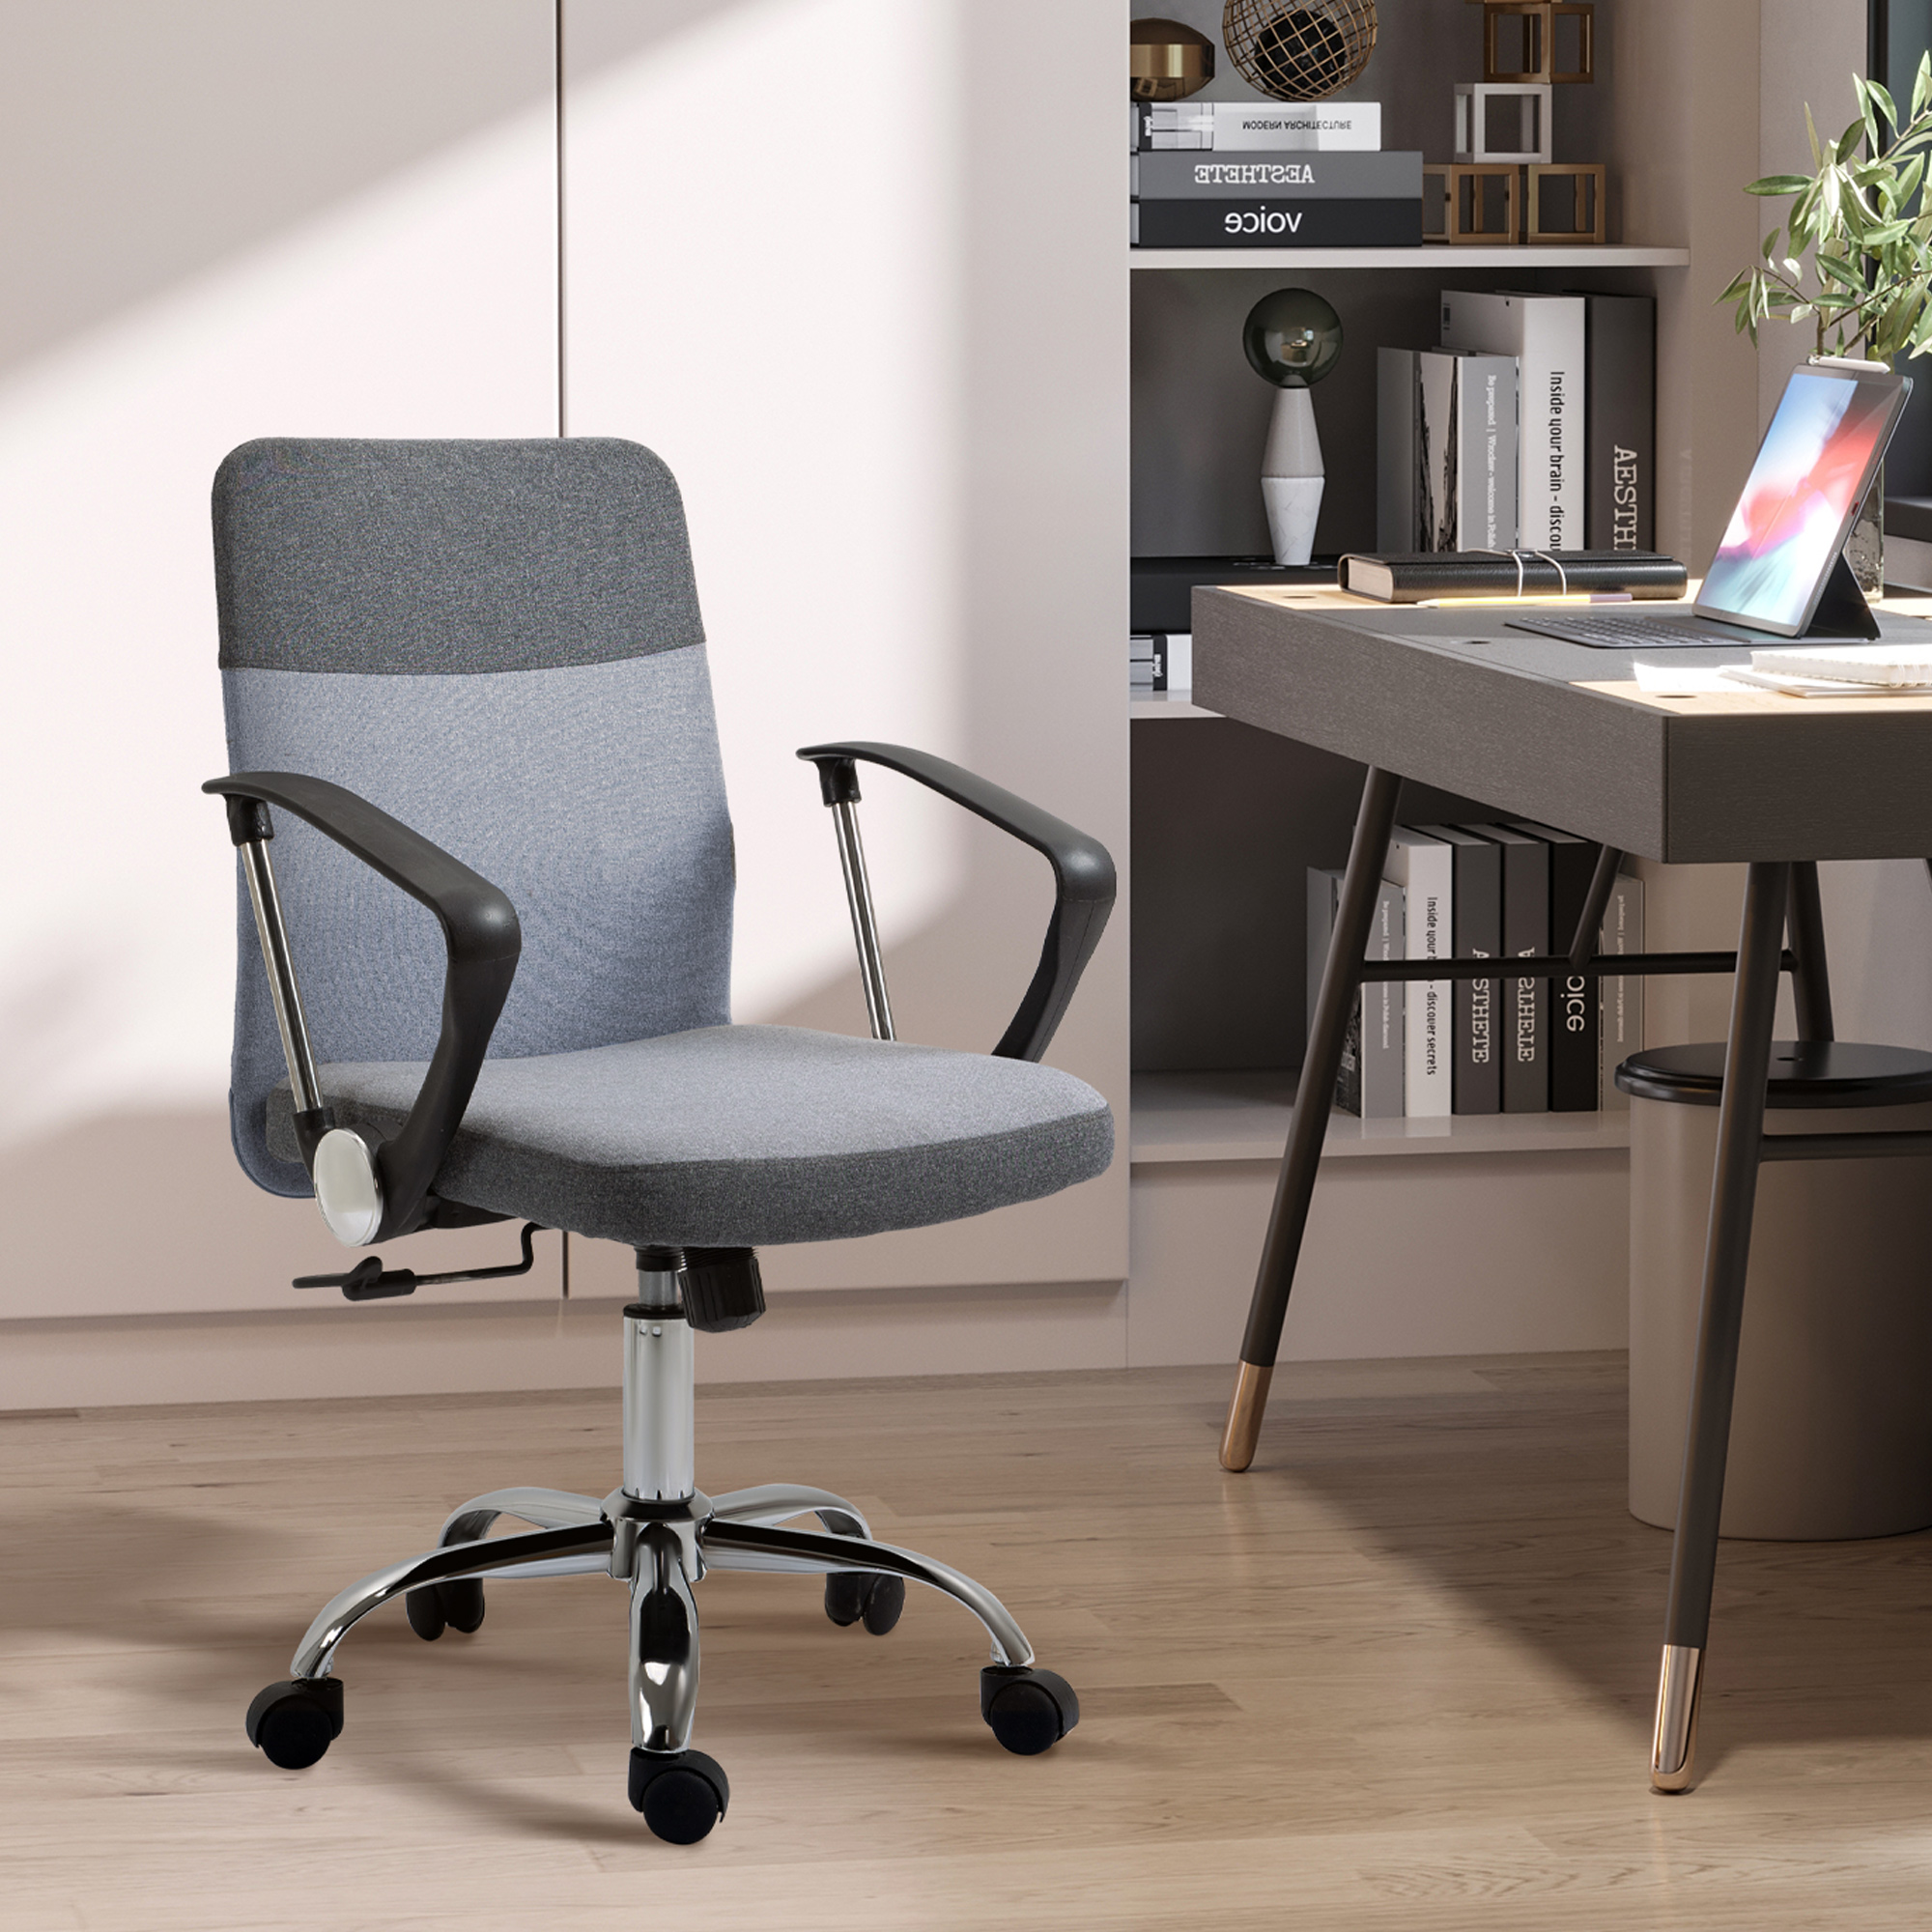 HomCom Website - Find your computer desk office chair recliner massage  furniture cabinet kitchen cart here